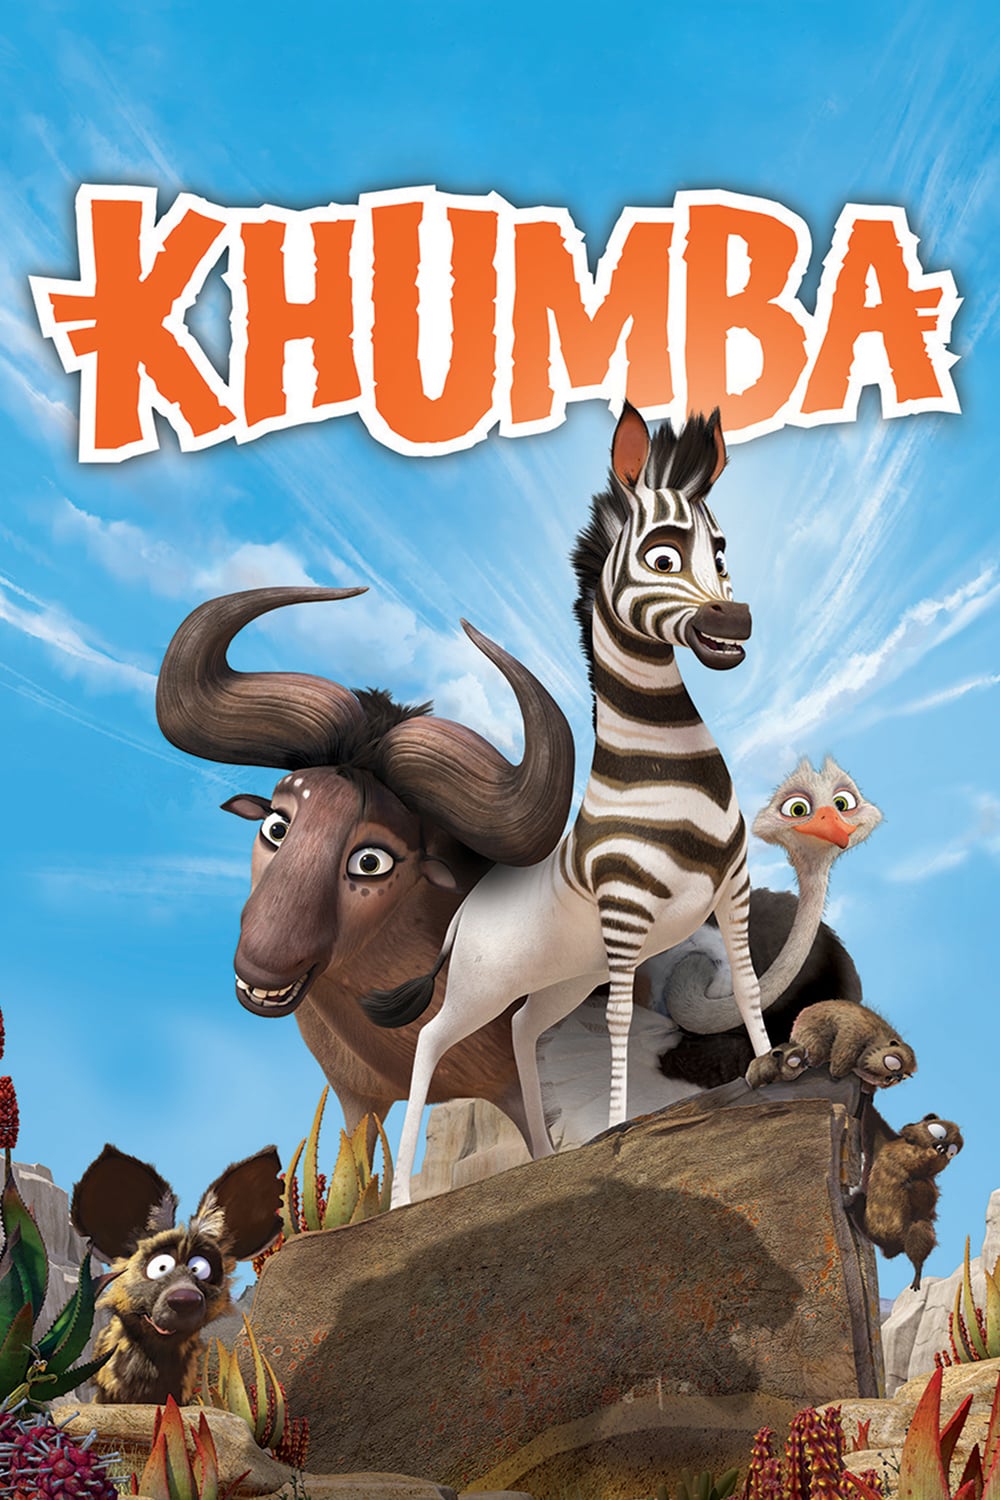 free direct download khumba full hd movie